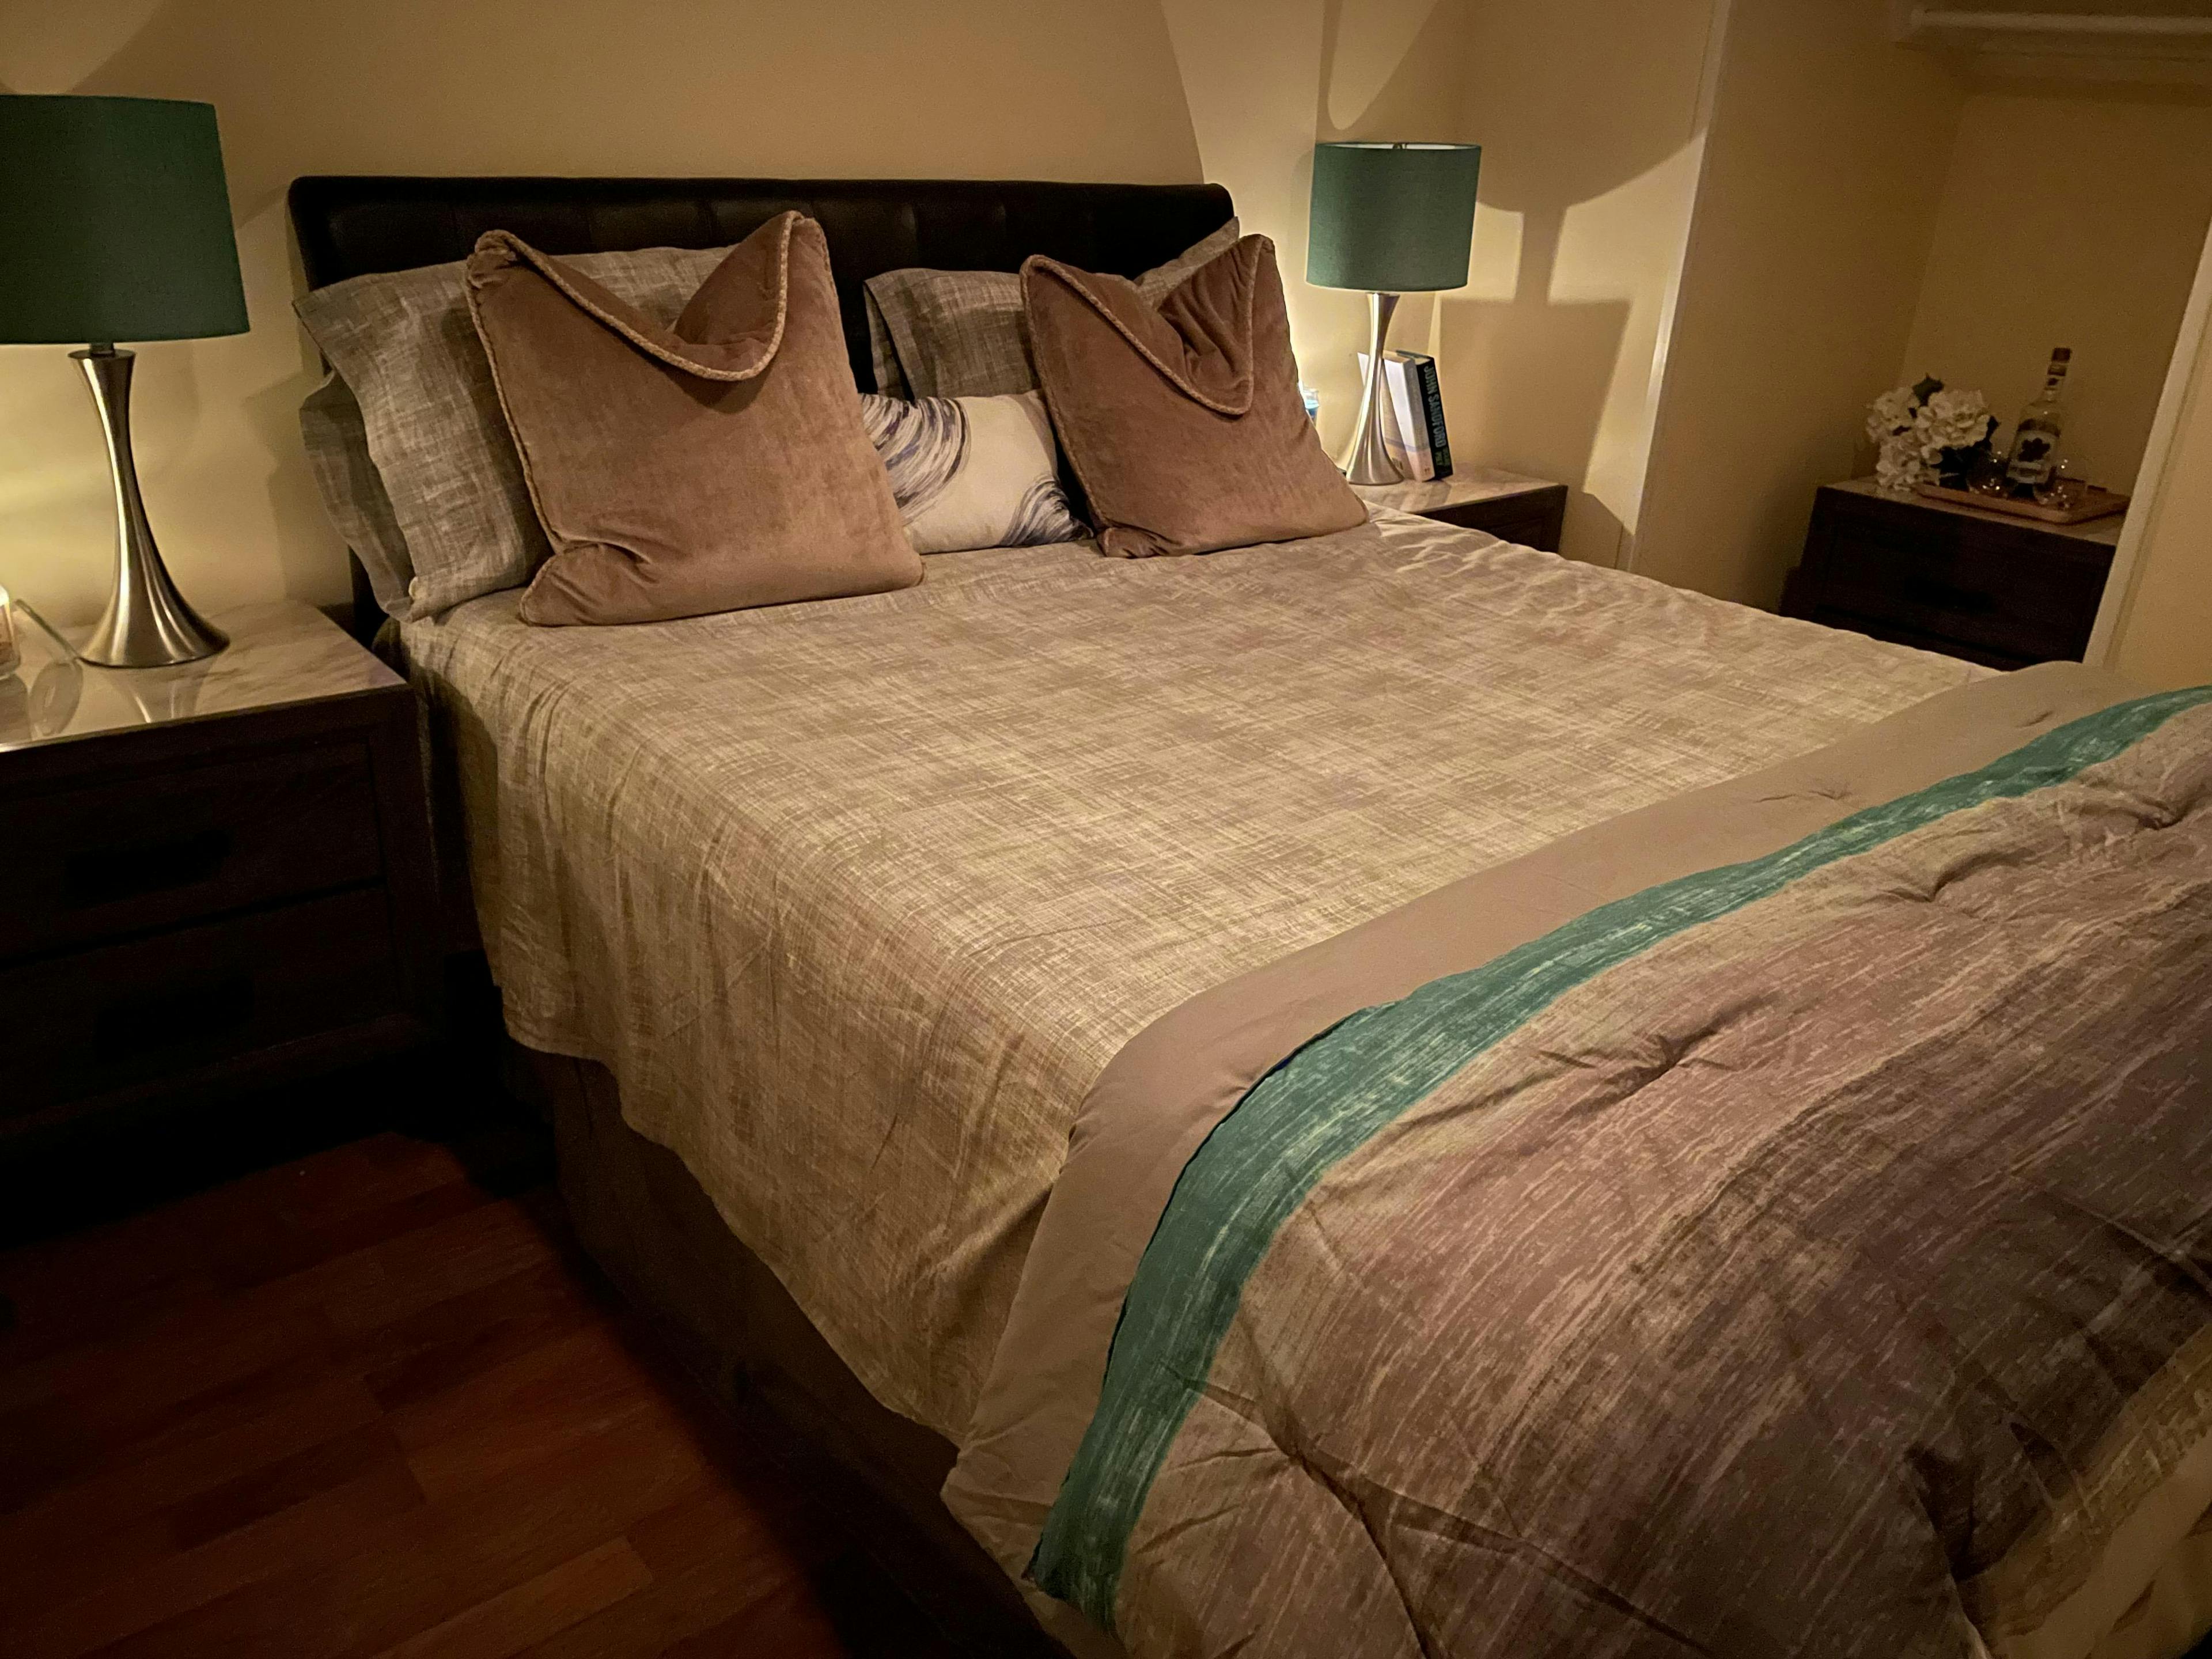 Image 1 - 1 Bedroom Rental in Vineyard Haven, Other - Sleeps 2